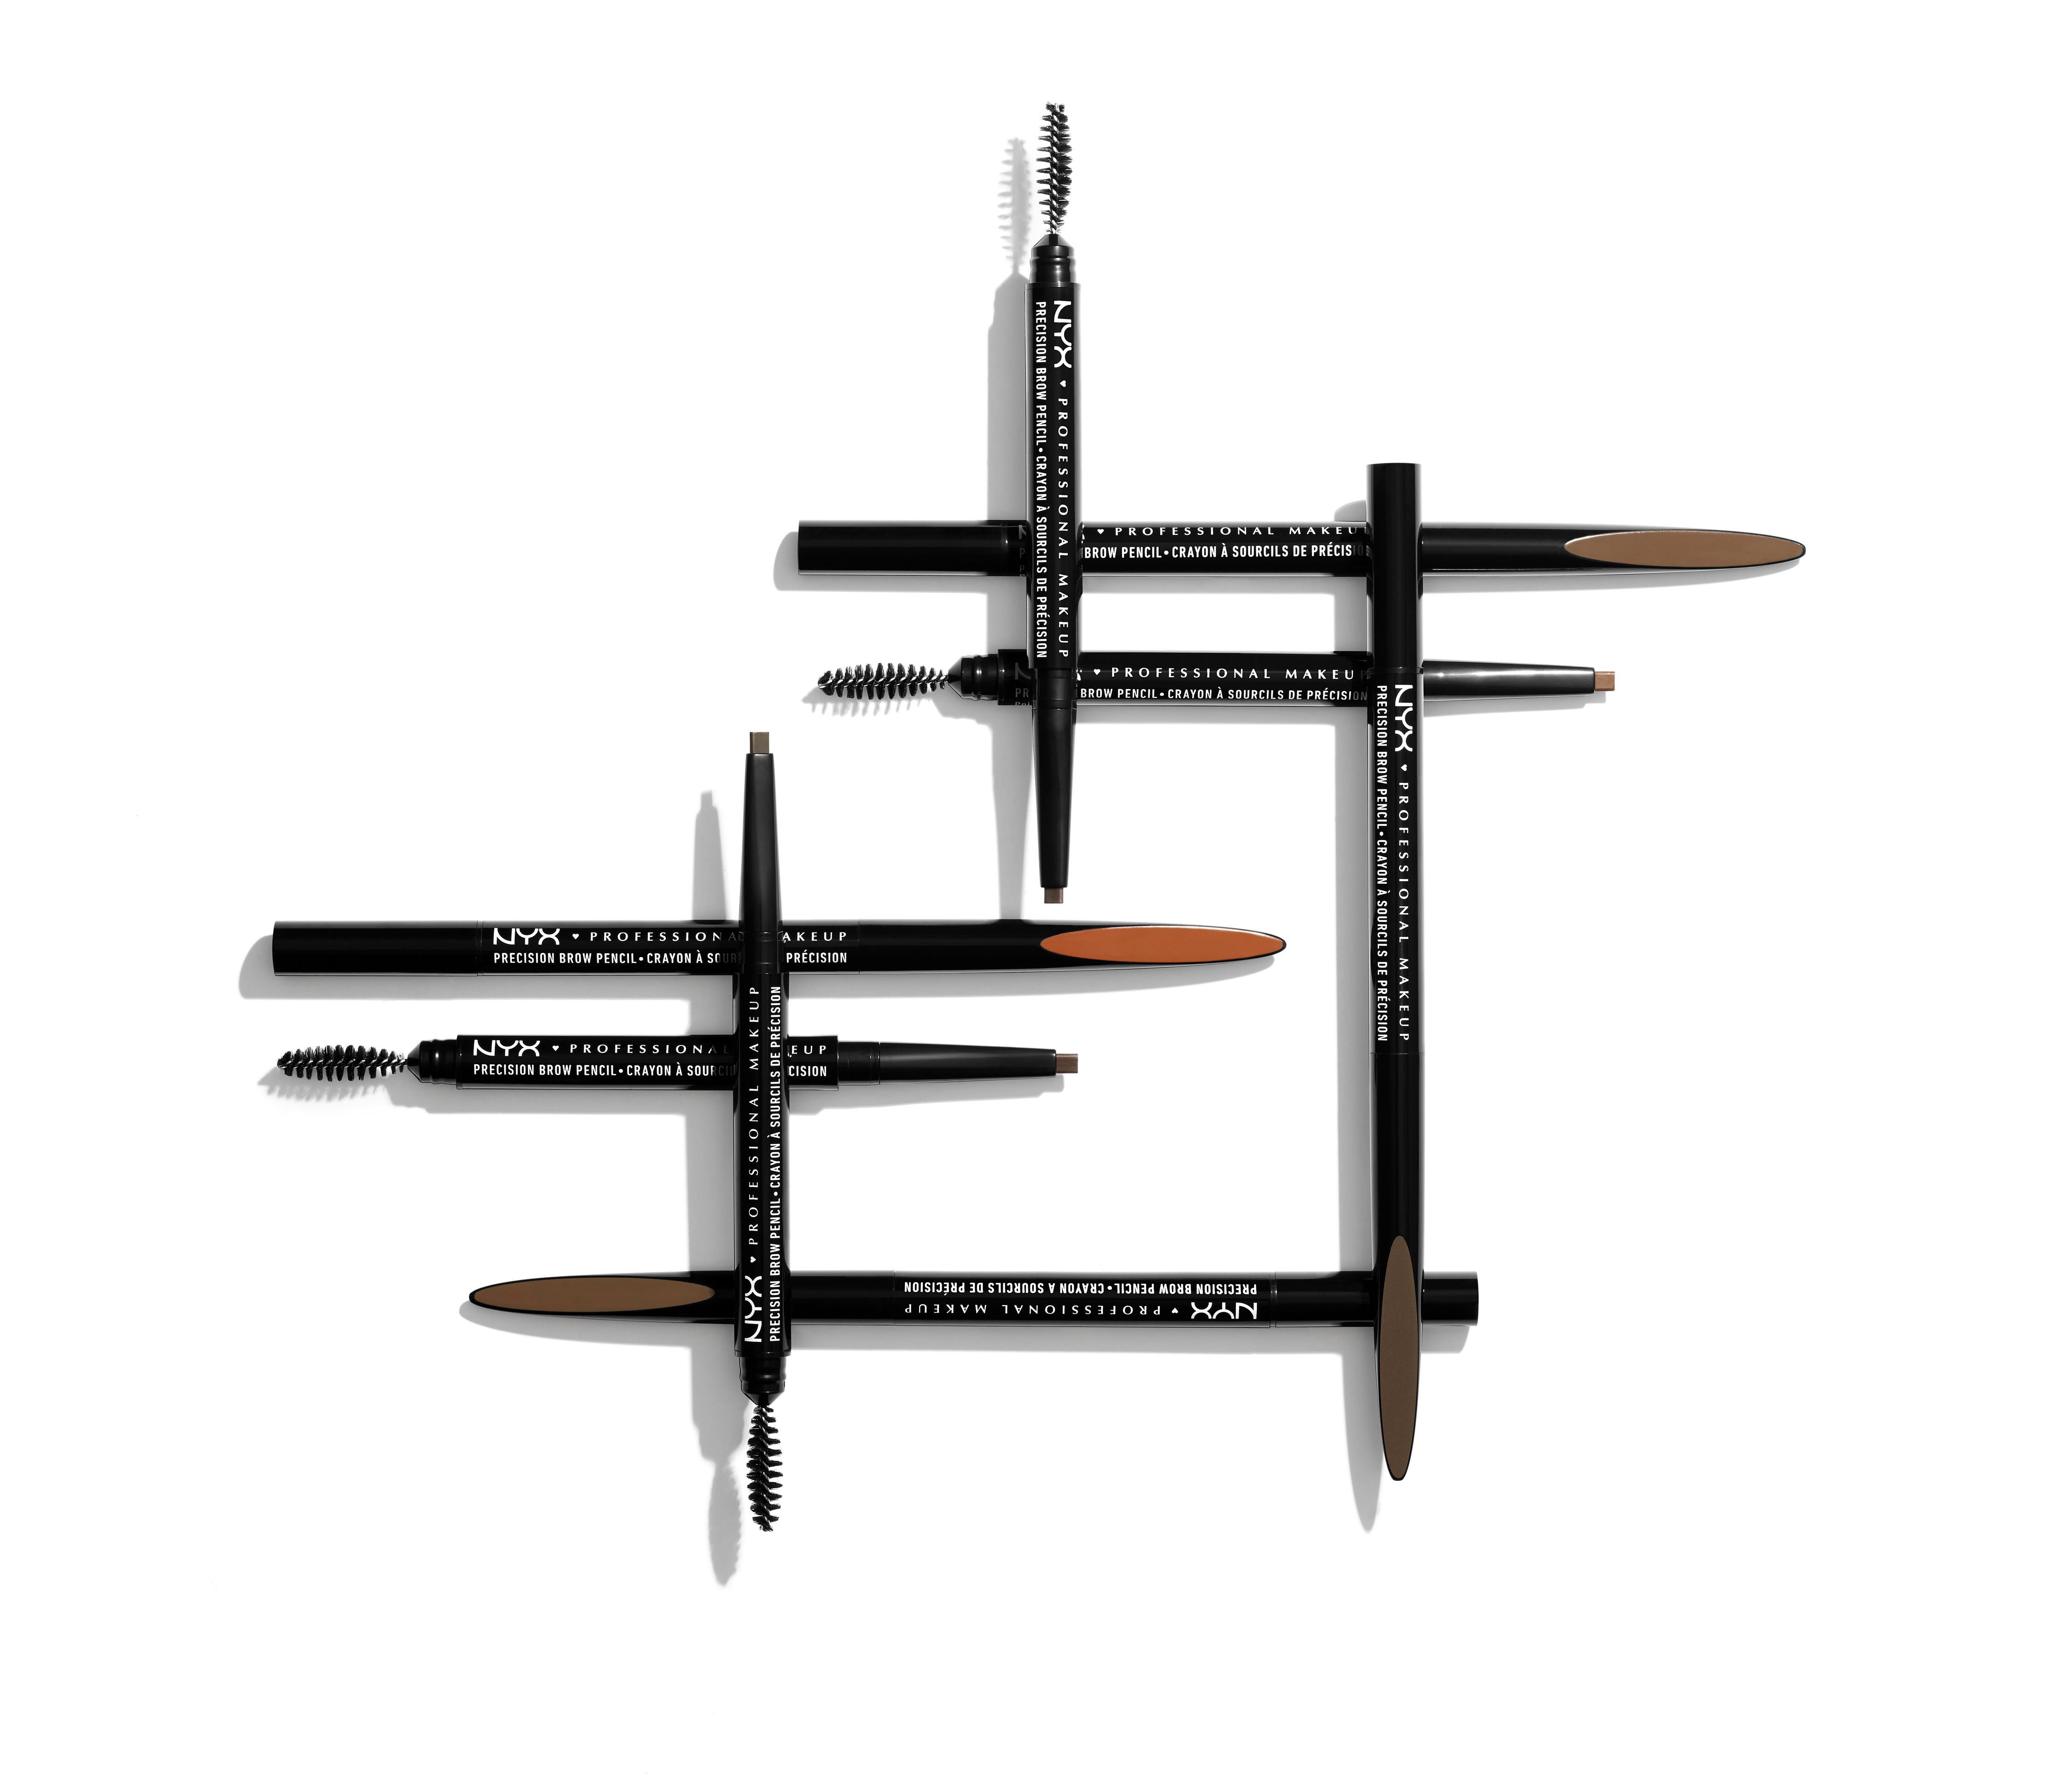 Pencil Makeup NYX Brow taupe Professional Precision Augenbrauen-Stift